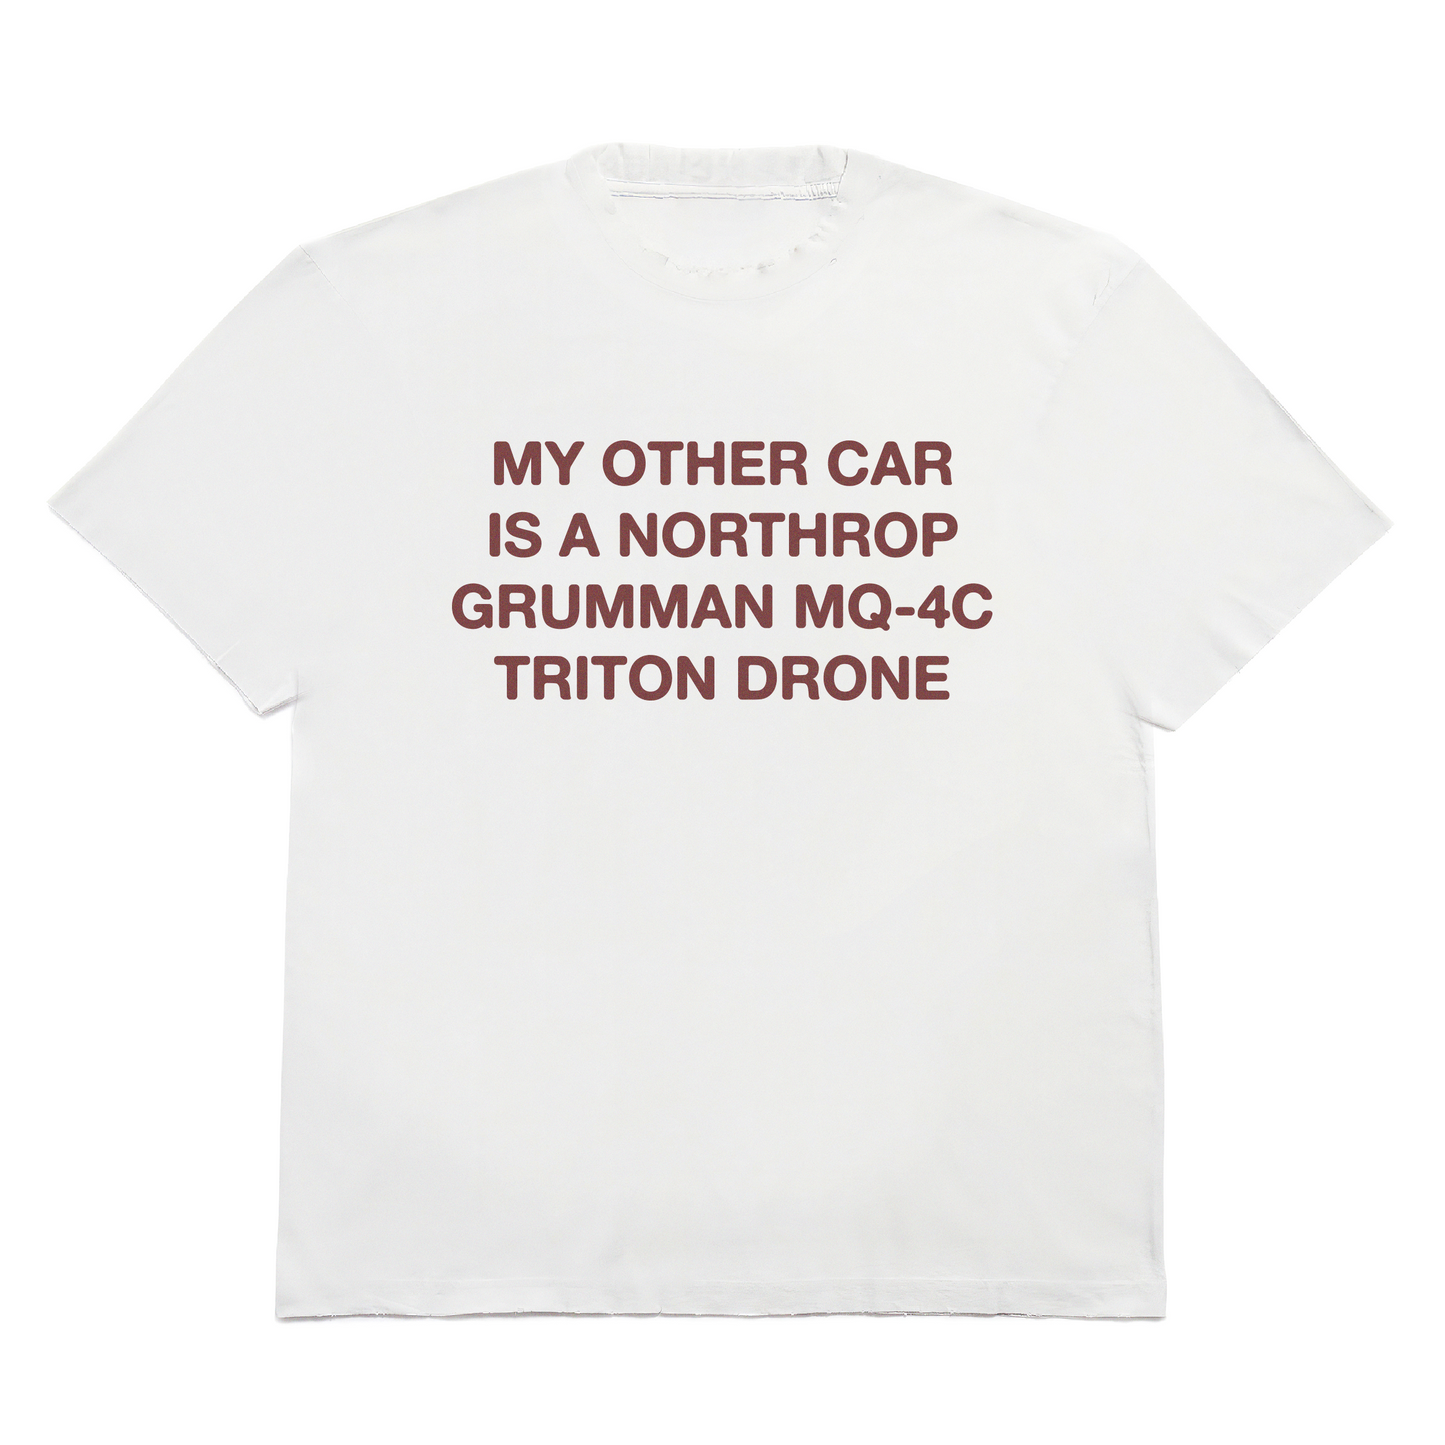 Fashion Politik "My Other Car is a Northrop Grumman MQ-4C Triton Drone" Tee - White - 100% Cotton Premium Comfort Colors